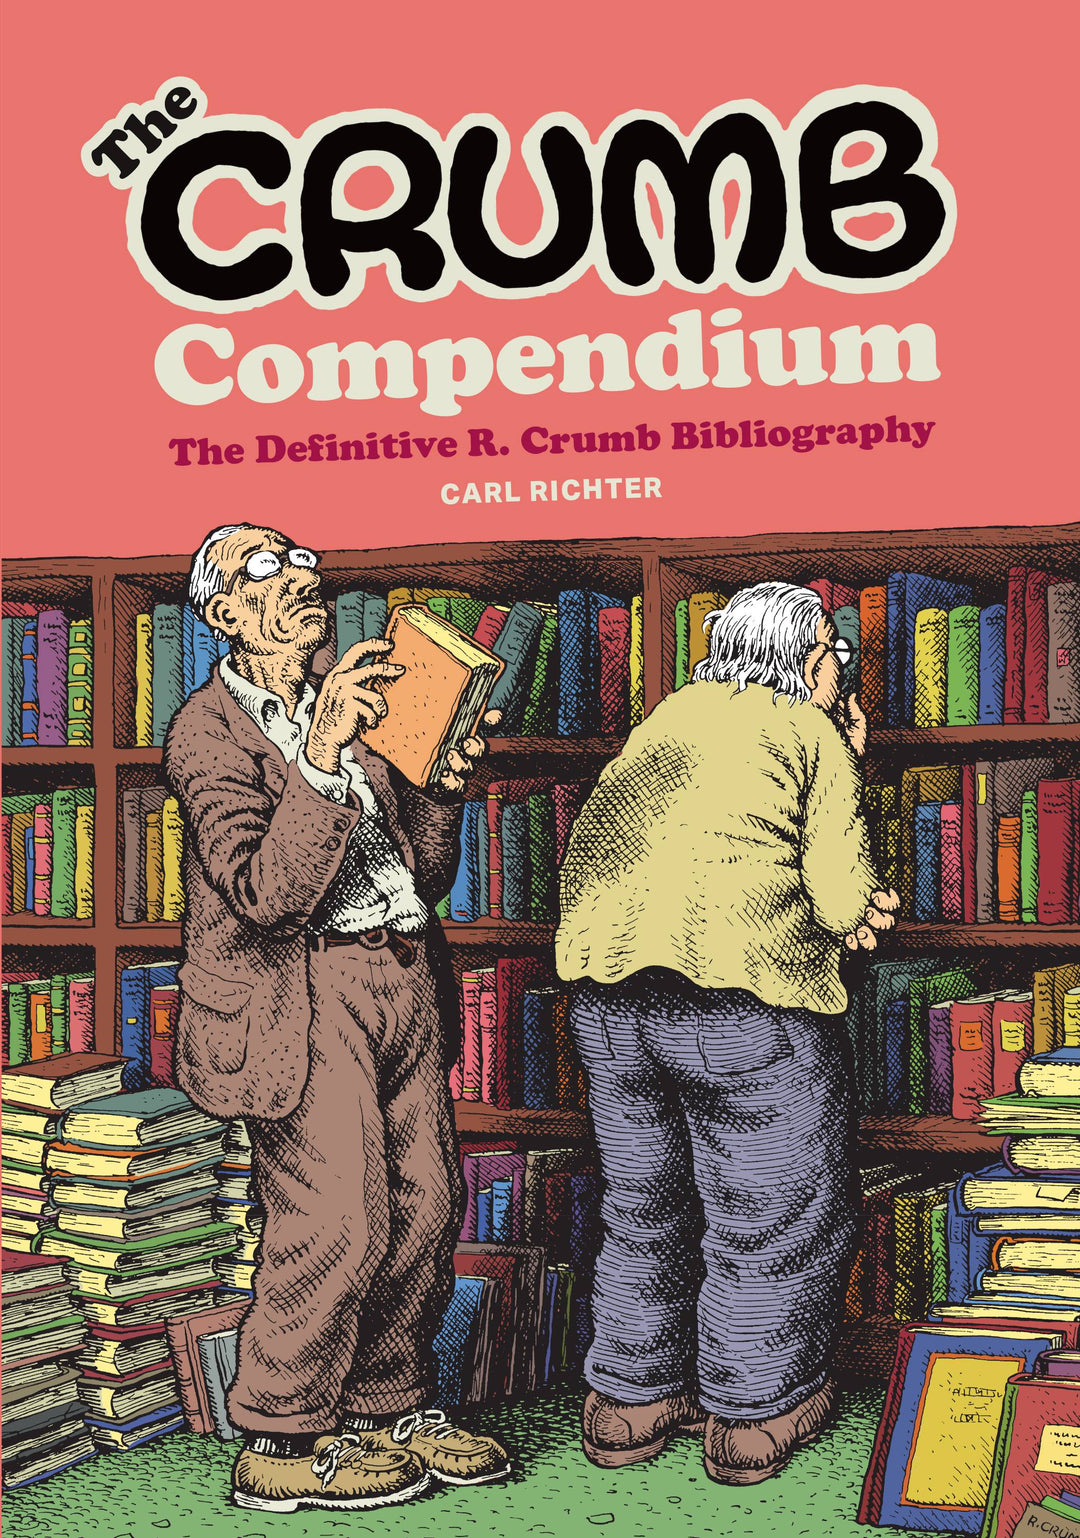 The Crumb Compendium Softcover OXI-04